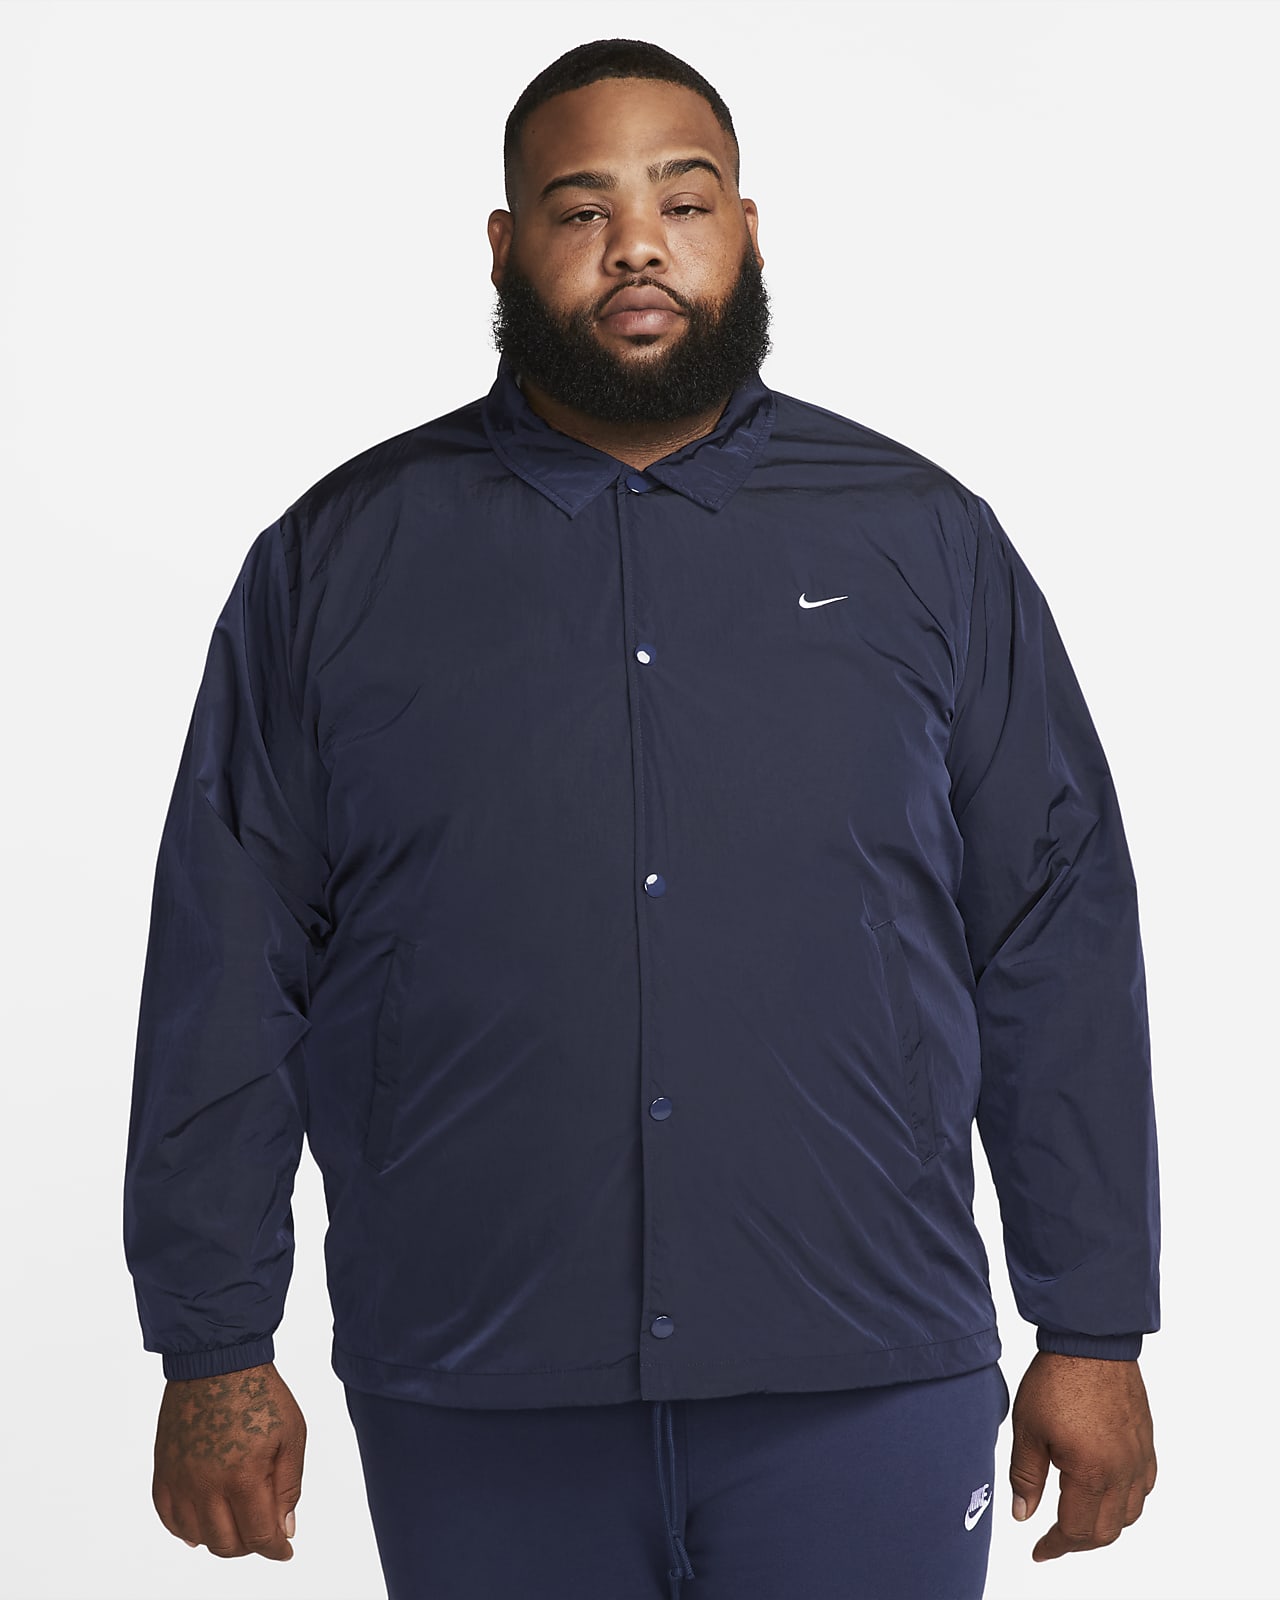 Nike Sportswear Authentics Men's Coaches Jacket. Nike IE